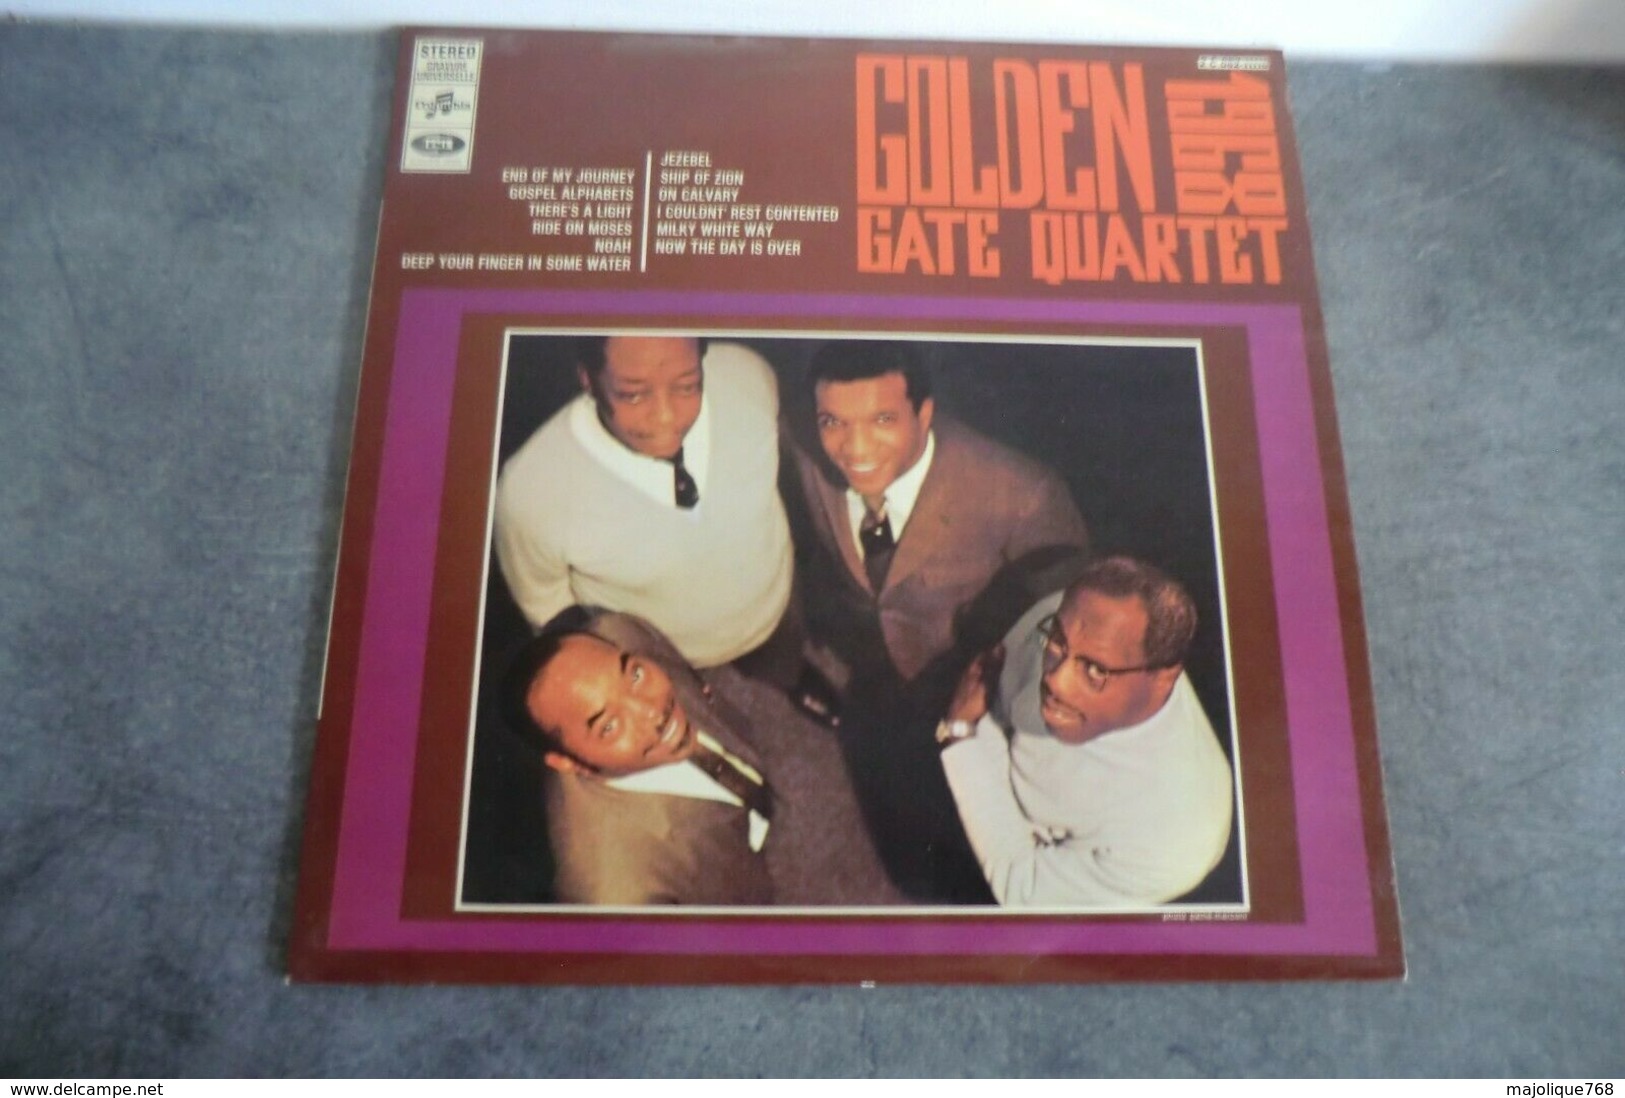 Disque - Golden Gate Quartet 1968 - Columbia 2 C 062-11116 - - Gospel En Religie